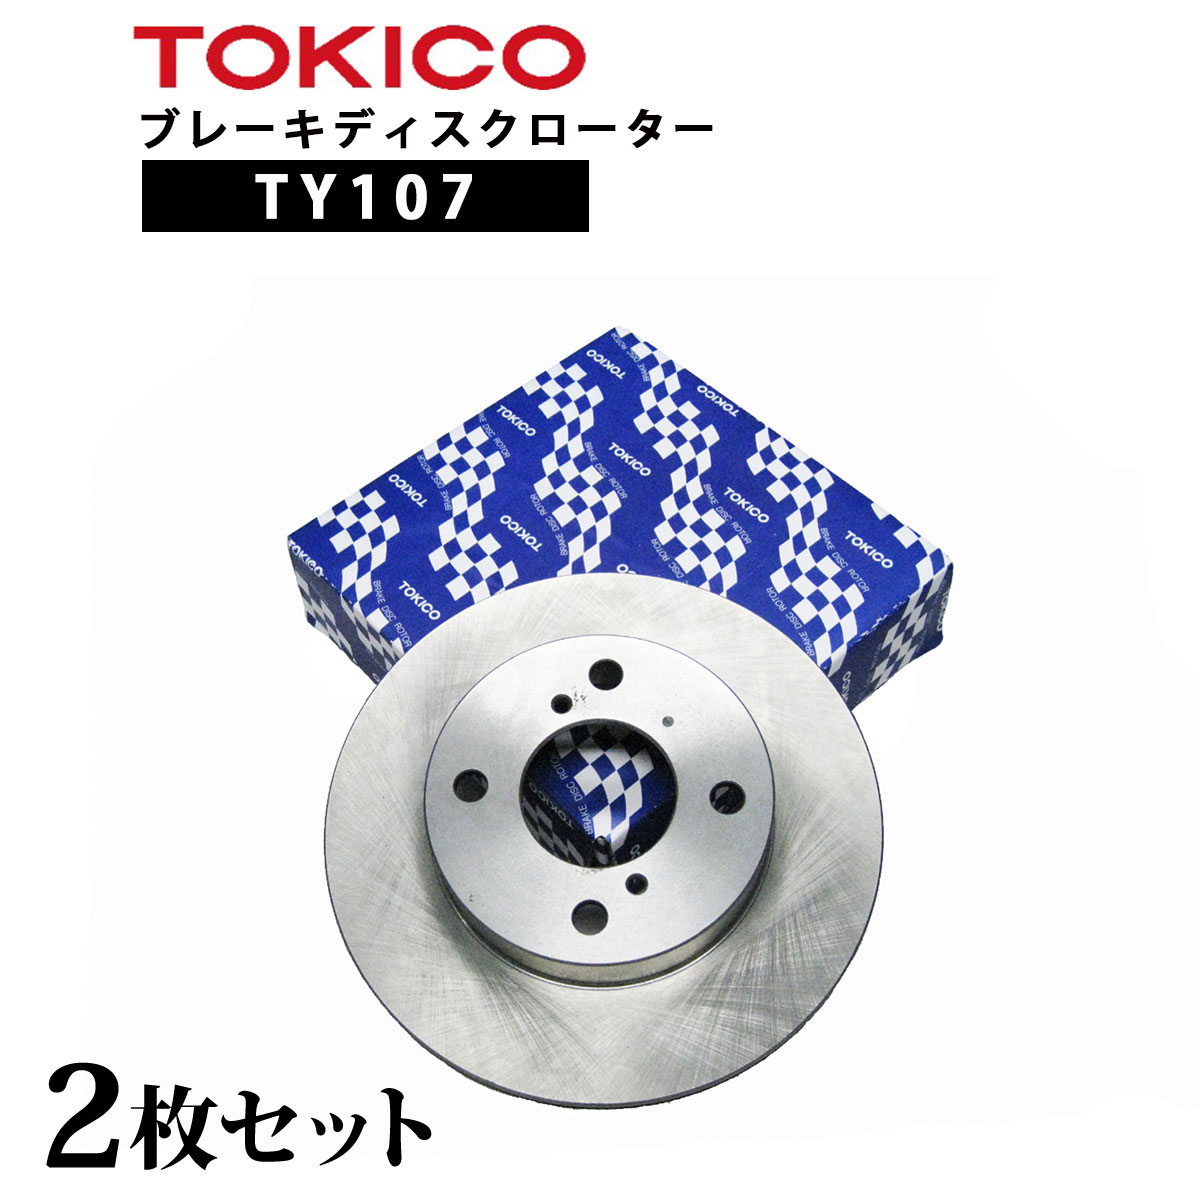 TY107 TOKICO ブレーキディスクローター リヤ 2枚 左右セット トキコ 日立| 適合 純正 イスズ 8-97034-036-1 ビッグホーン R UBS26/69/73 他社 BD6912 RI200 G6-101B J6R550J